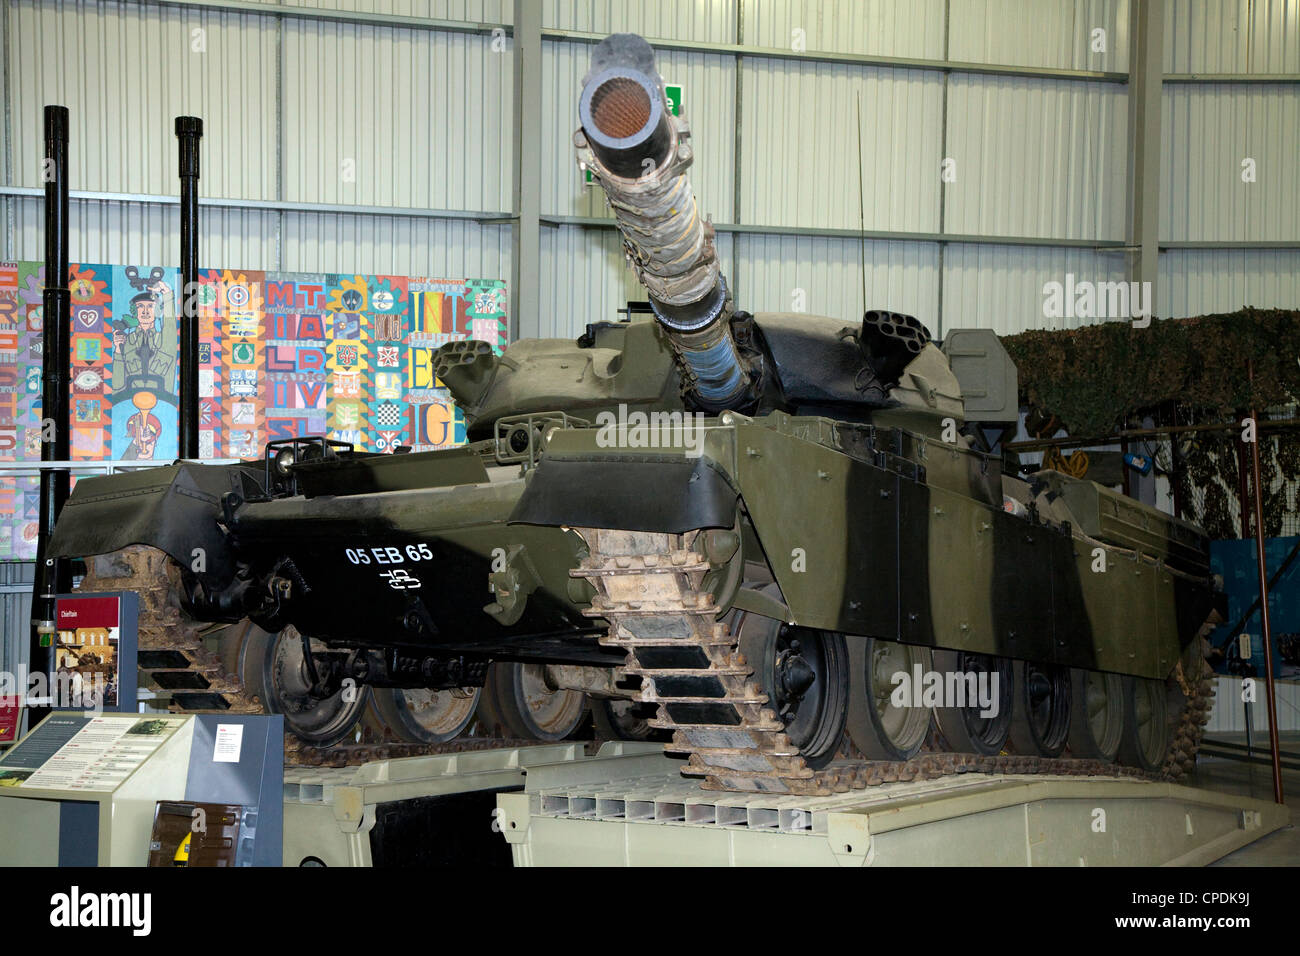 FV 4201 Chieftain Main Battle tank / MBT exhibit on display at The Tank Museum, Bovington, Dorset. UK. Stock Photo